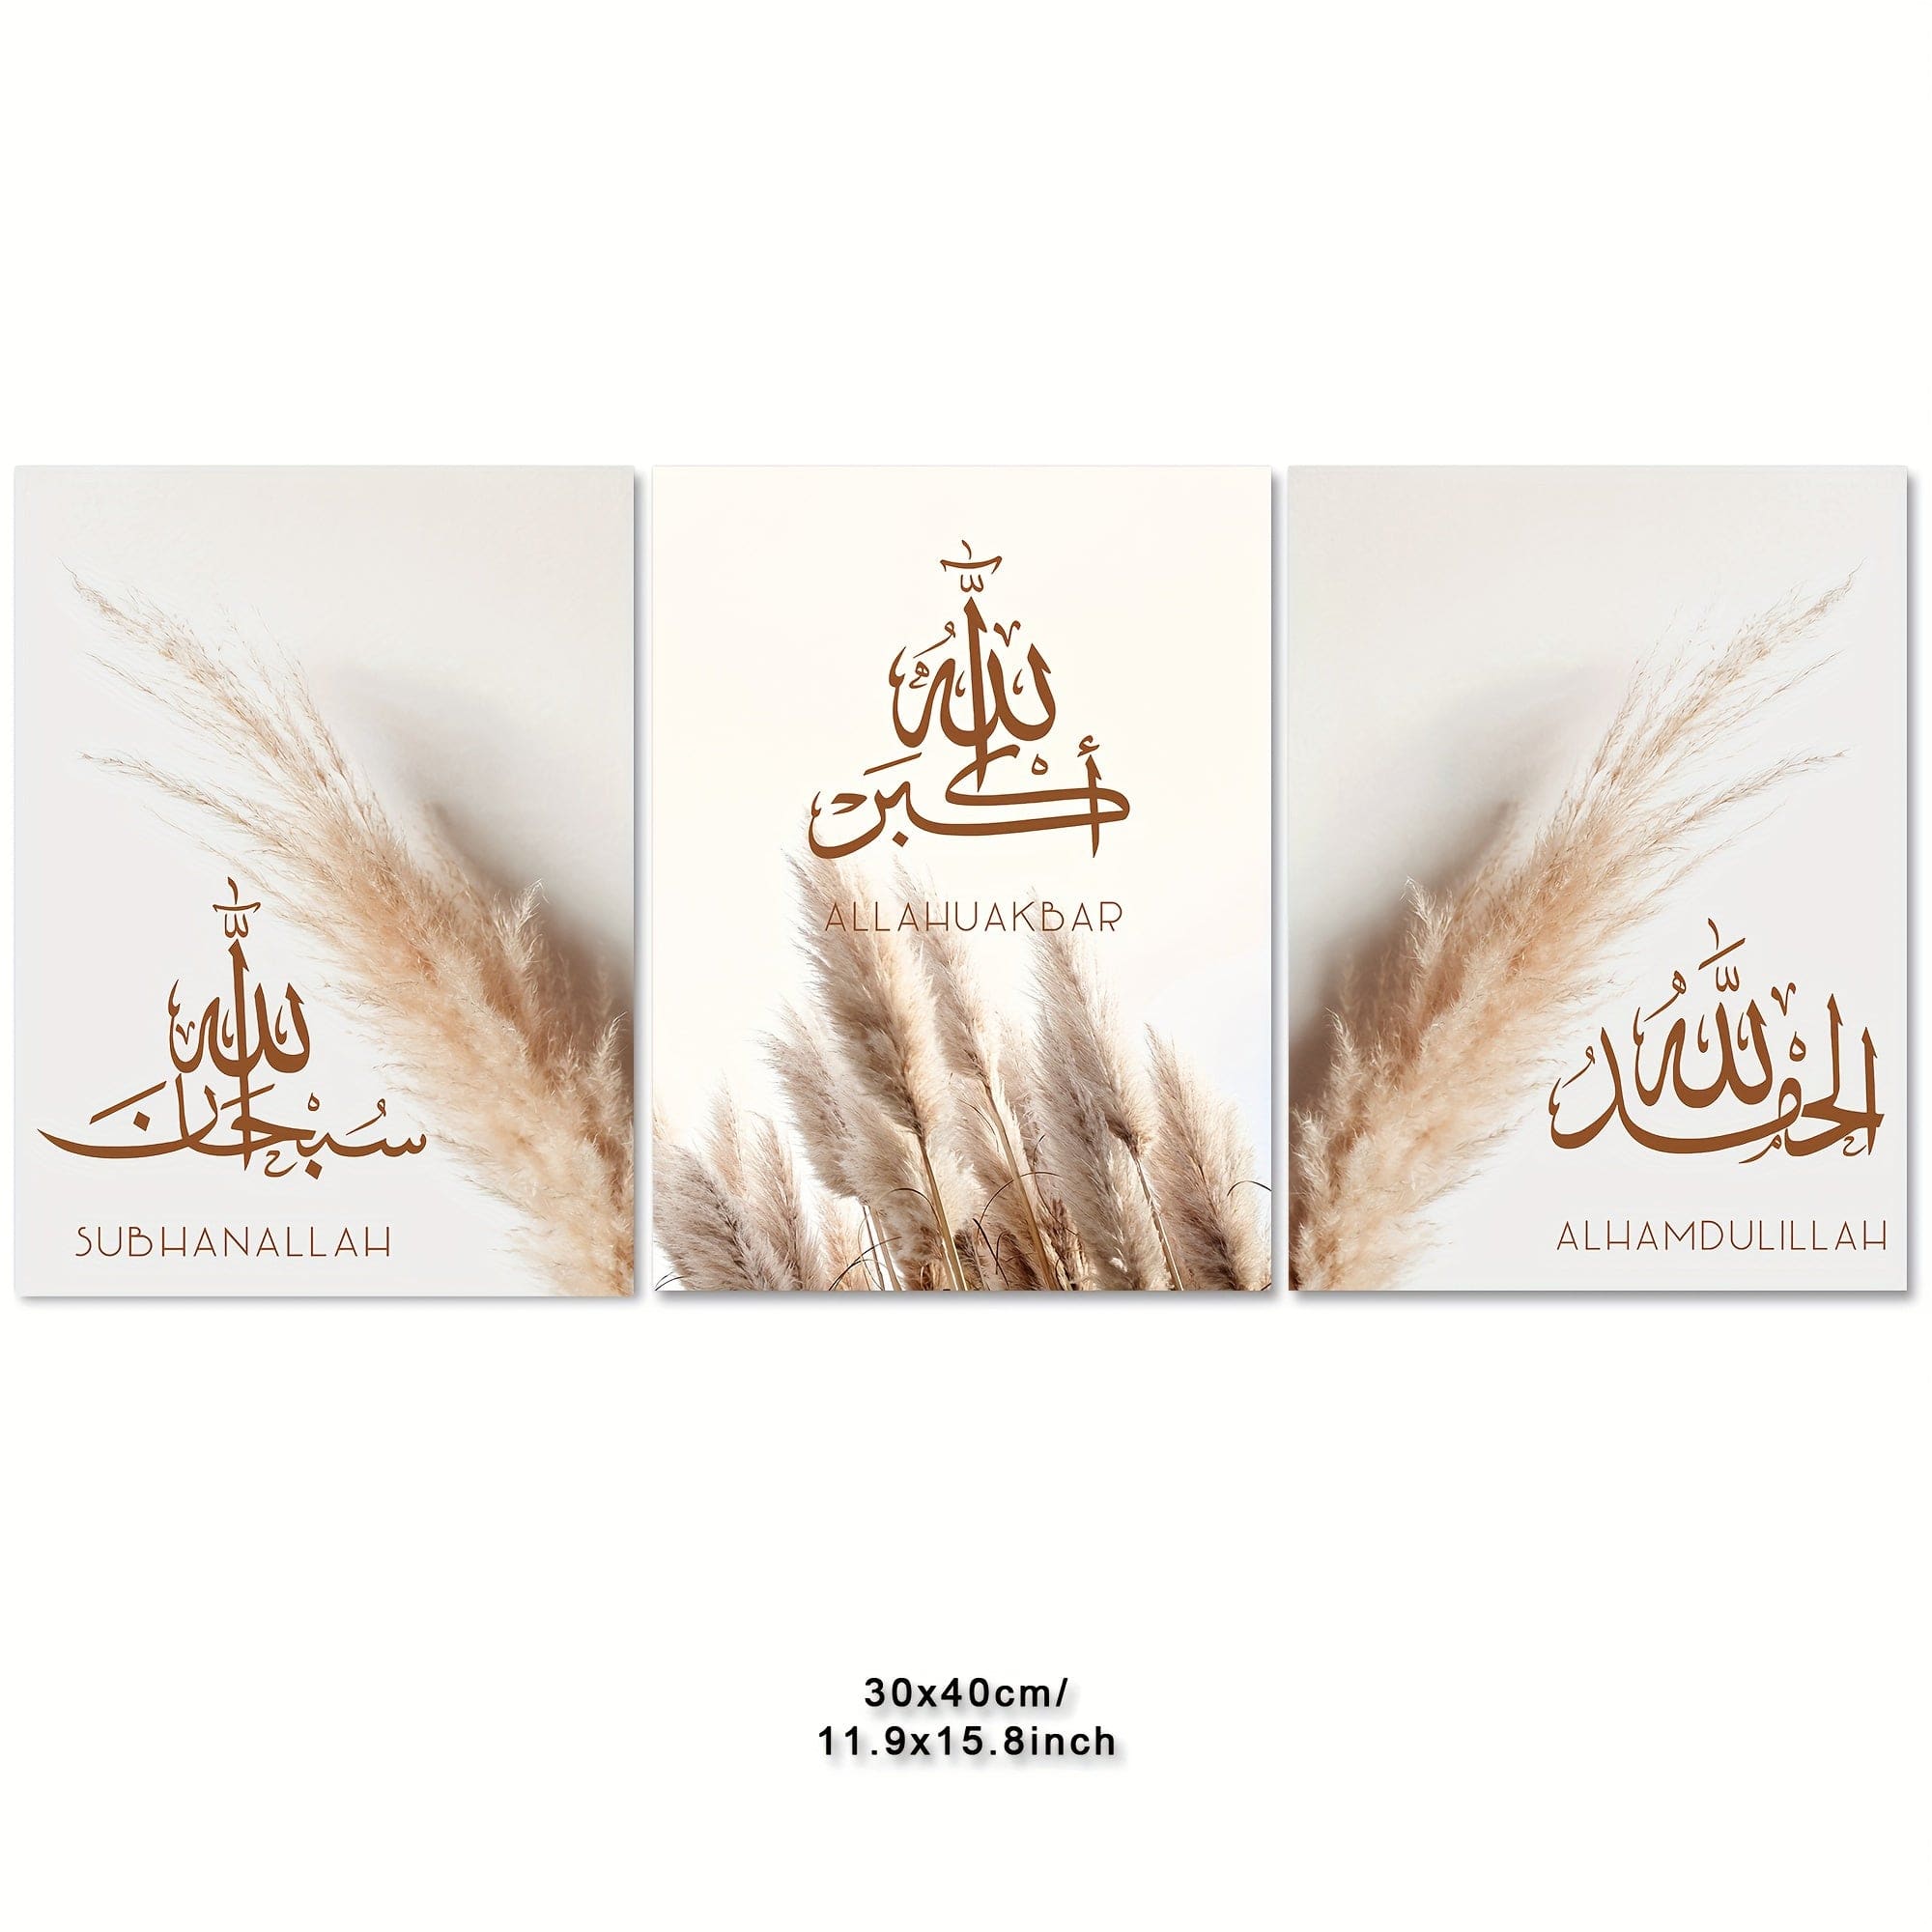 deen-souvenir customized 08 / 30 X 40 Cm/ 3-teiliges Islamisches Leinwandbild mit Motivationszitat - Typografie Kunstwerk 17592238194021